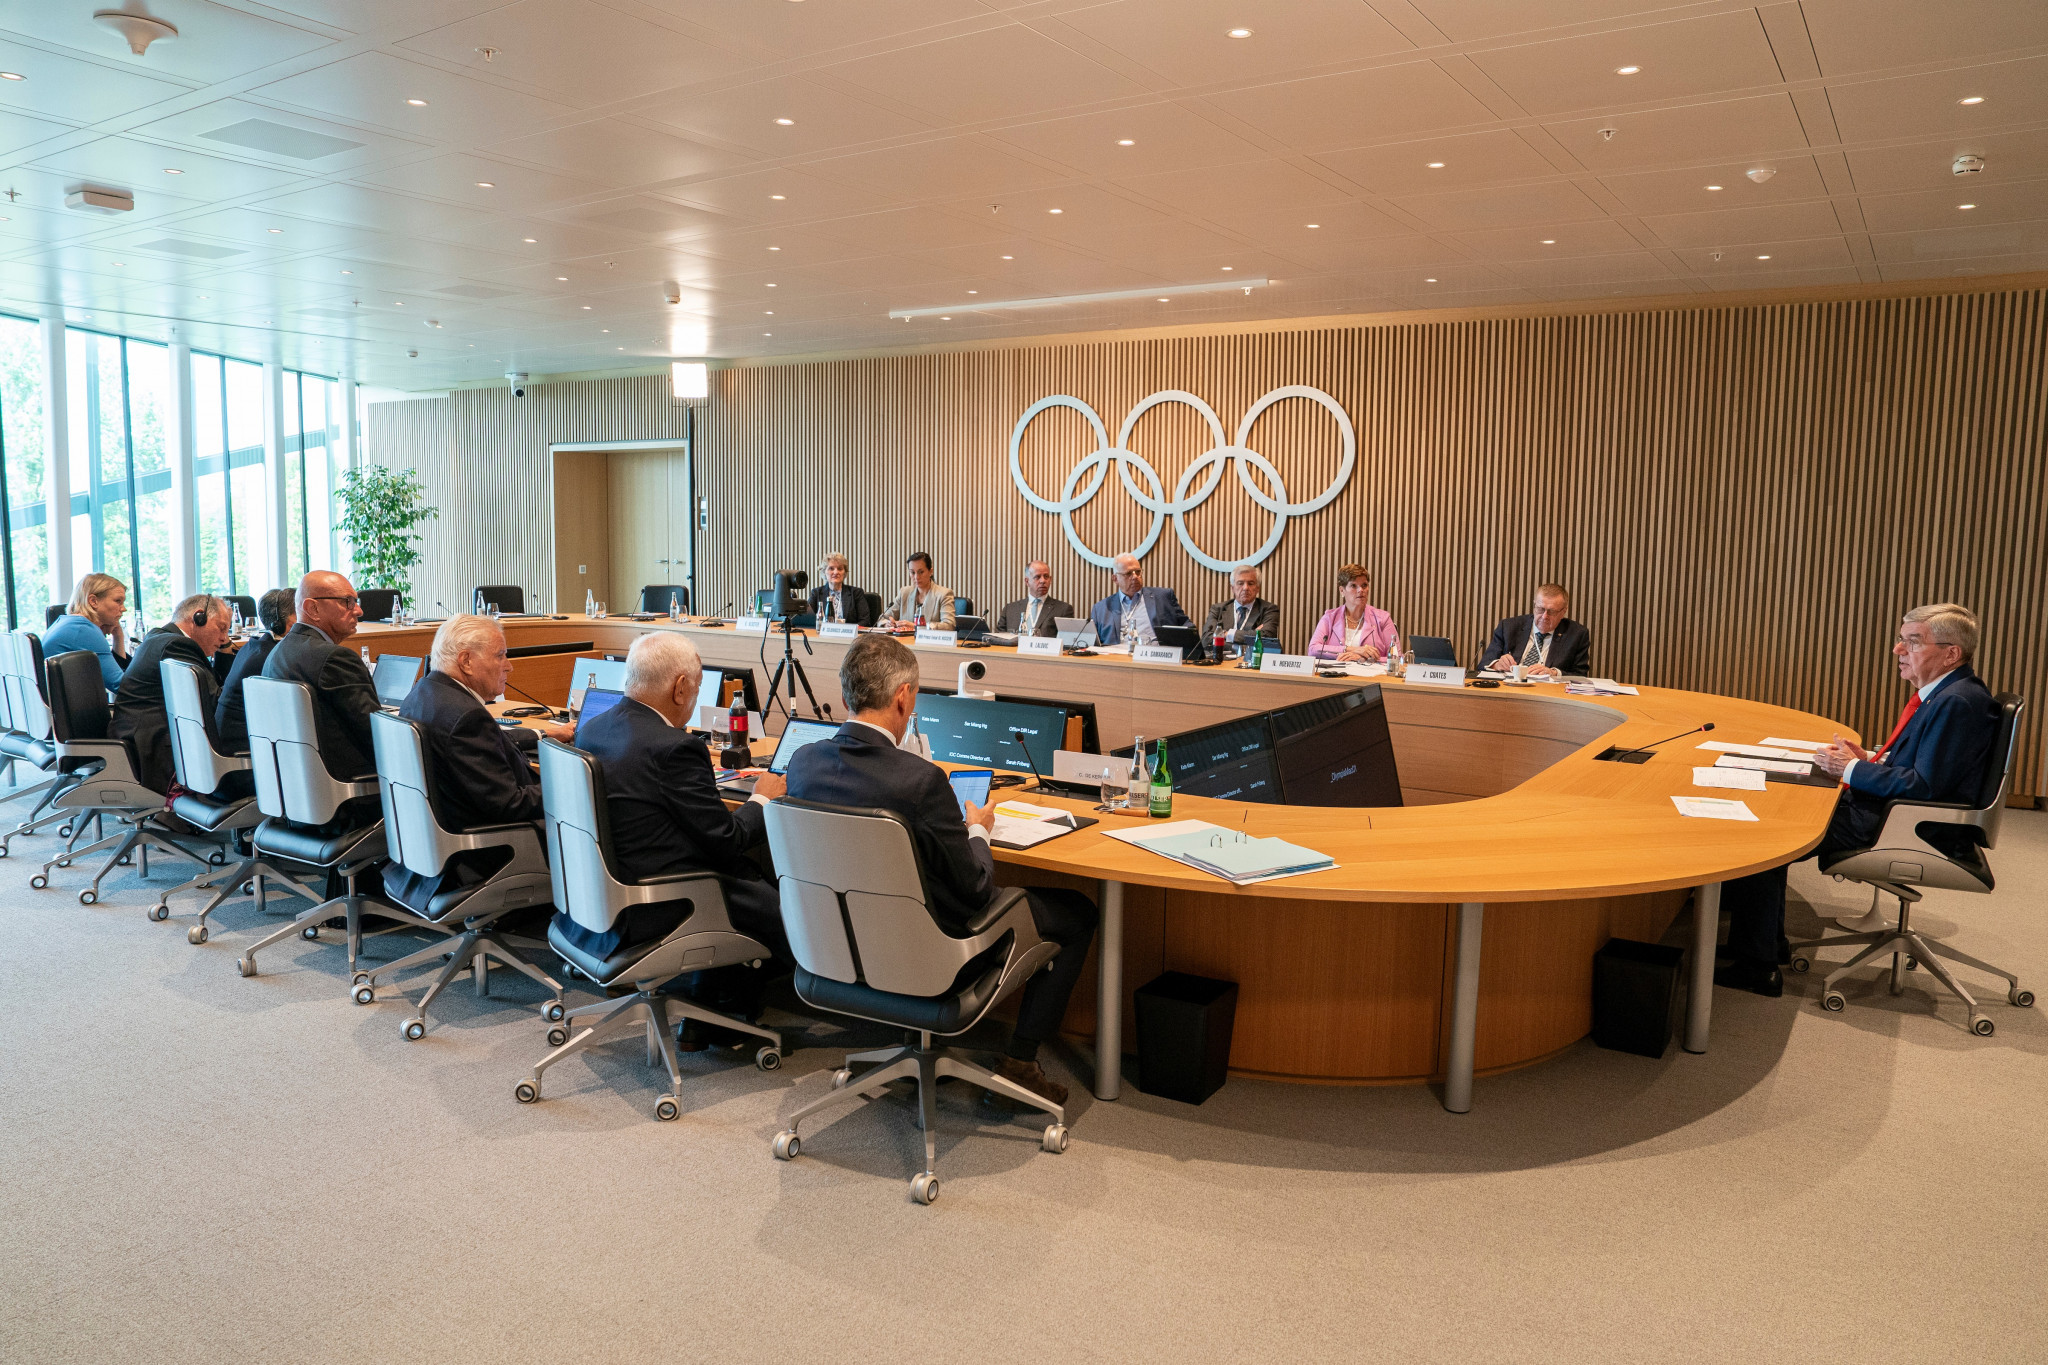 IOC says "plenty of time" to take Russia decision for Paris 2024